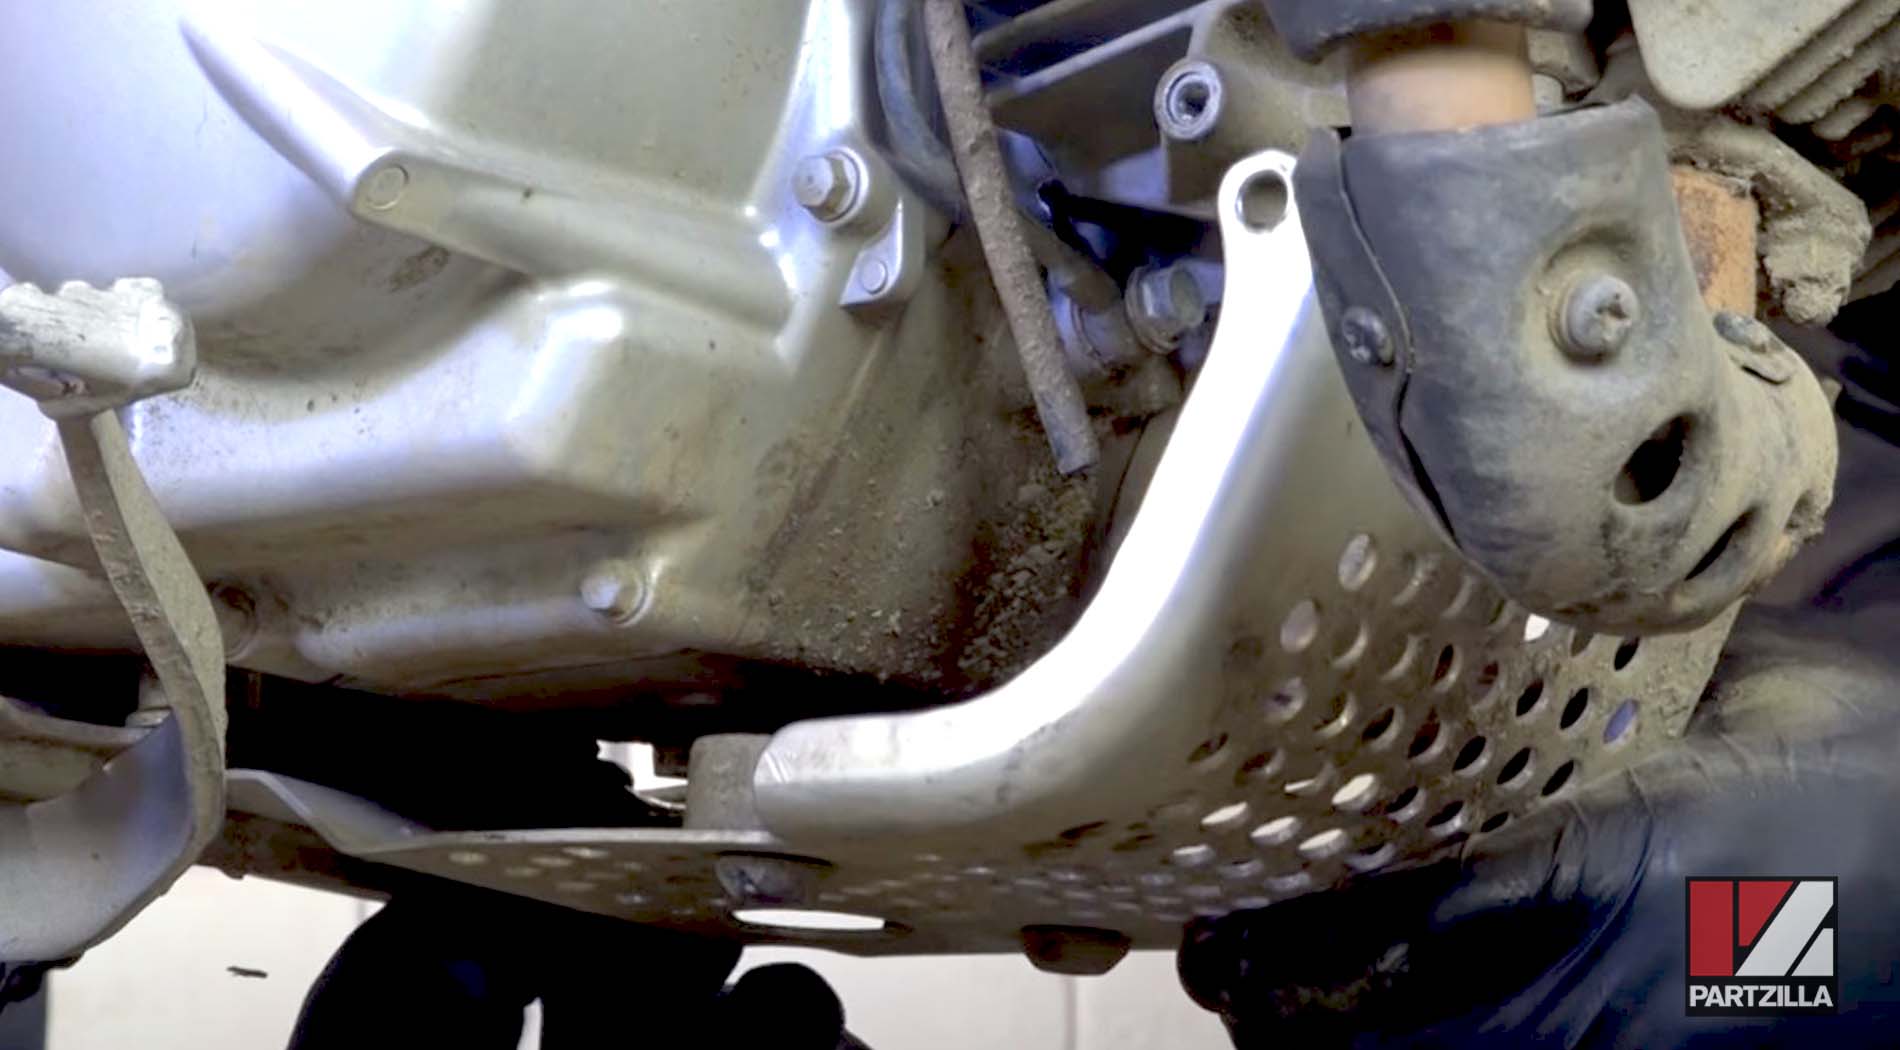 Kawasaki KLX 110 dirt bike oil change skid plate removal